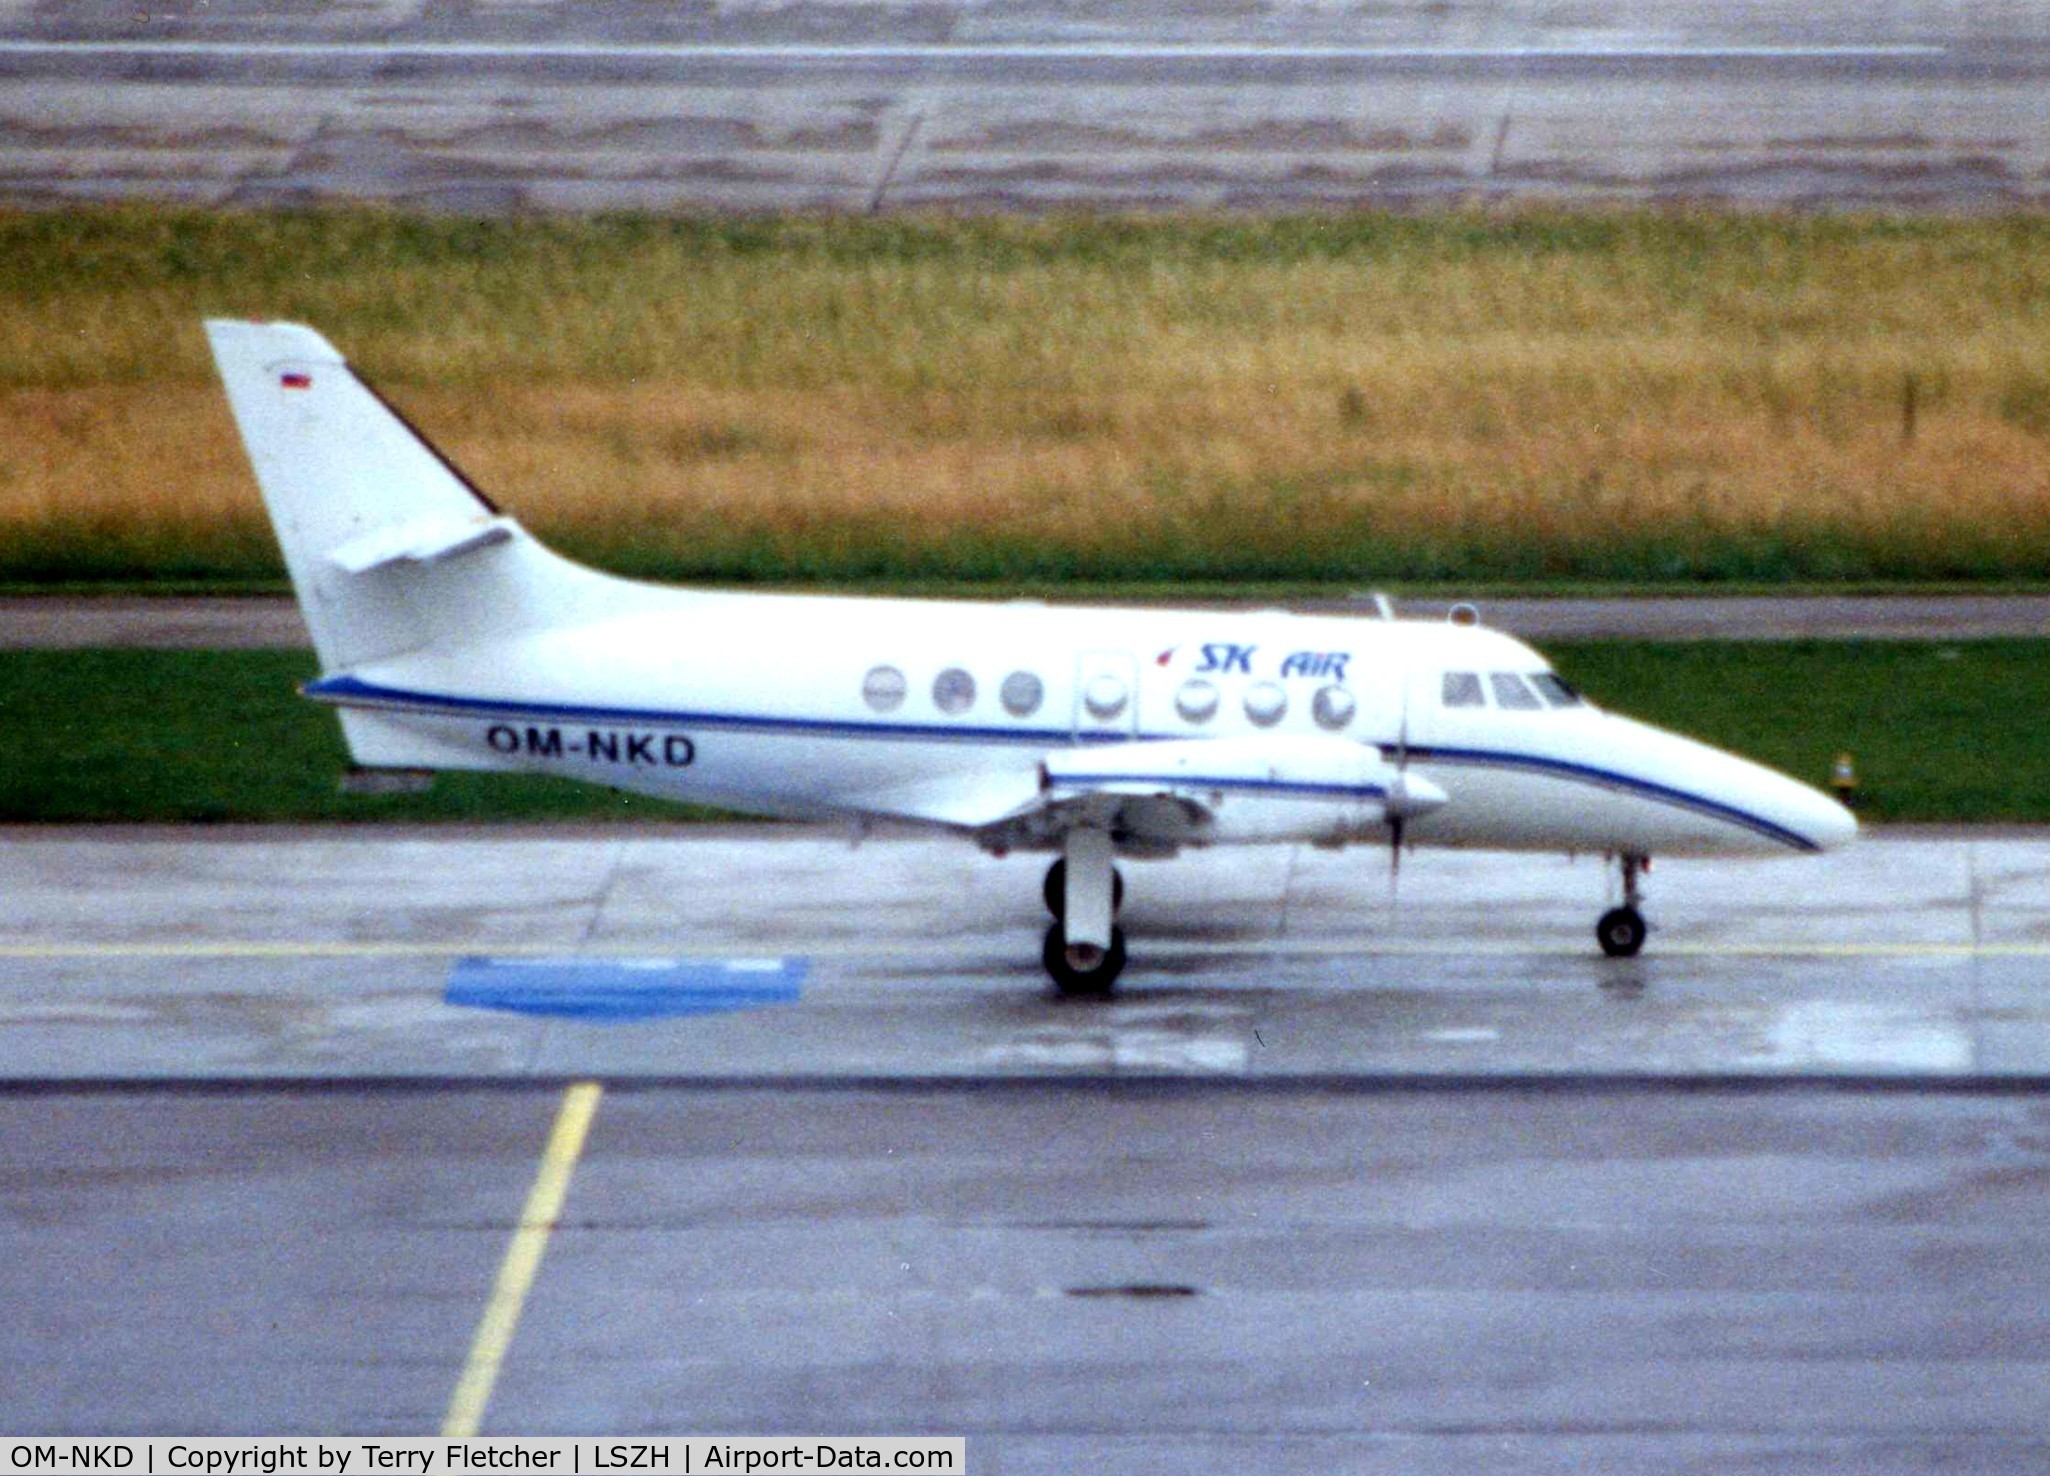 OM-NKD, 1983 British Aerospace BAe-3102 Jetstream 31 C/N 612, SK Air's Jetstream 3102 cn 612 at Zurich